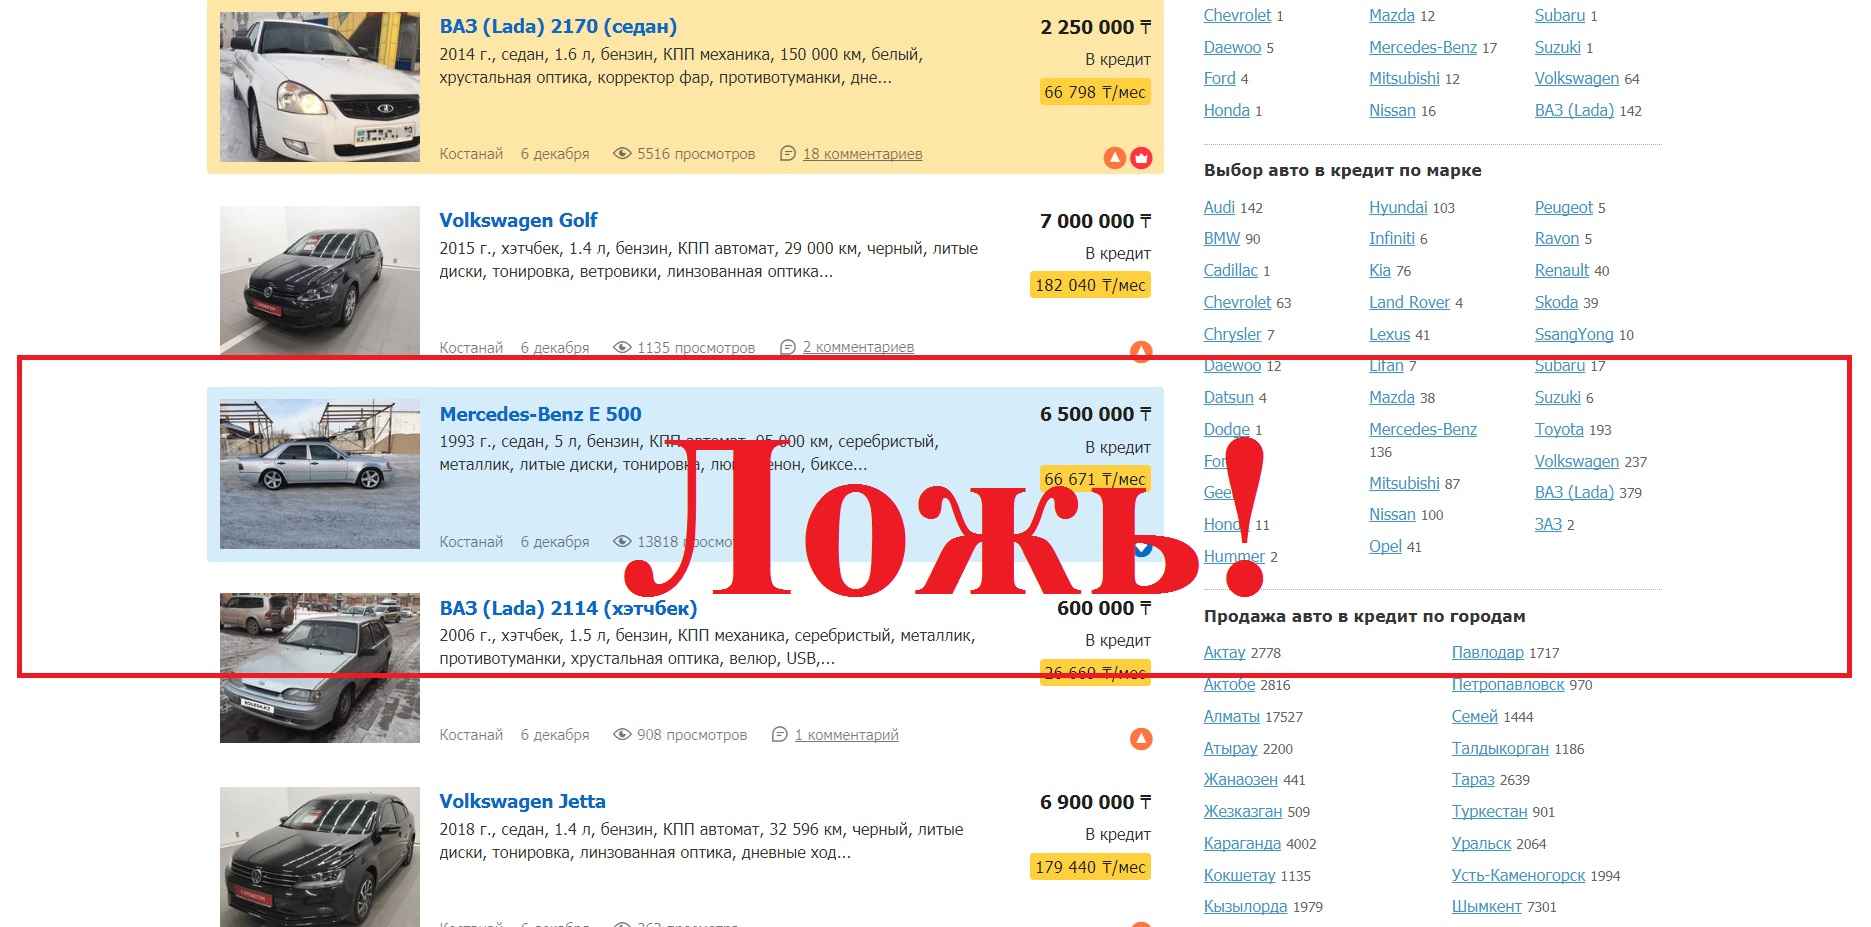 Kolesa.kz – как мошенники обманывают на сайте kolesa.kz